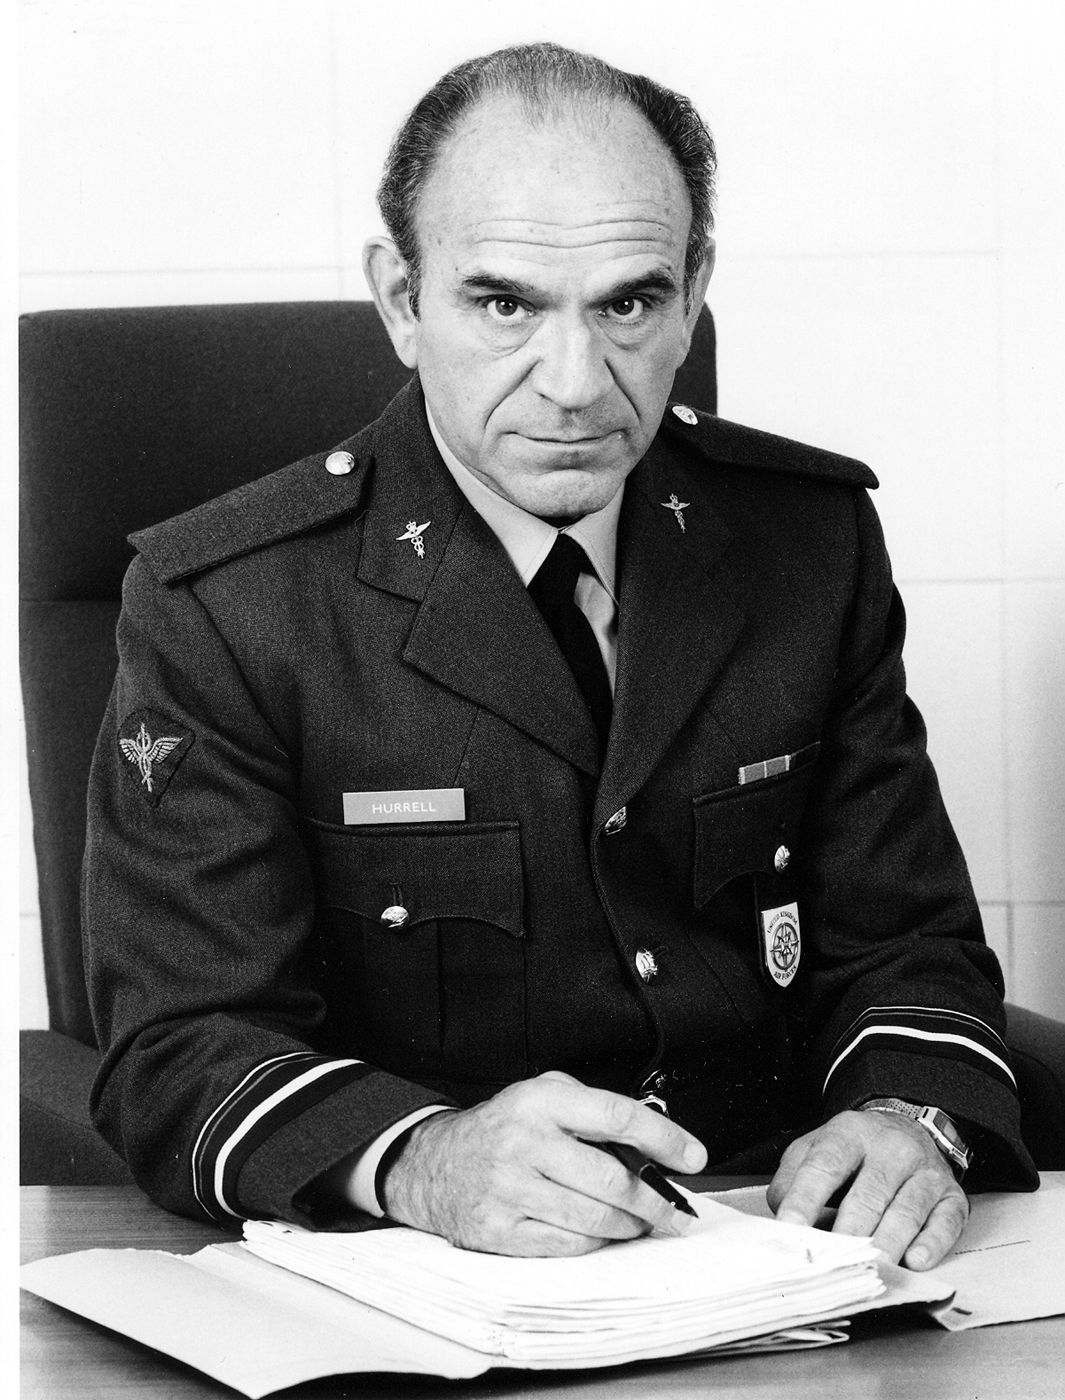 Air Vice-Marshal Freddie Hurrell